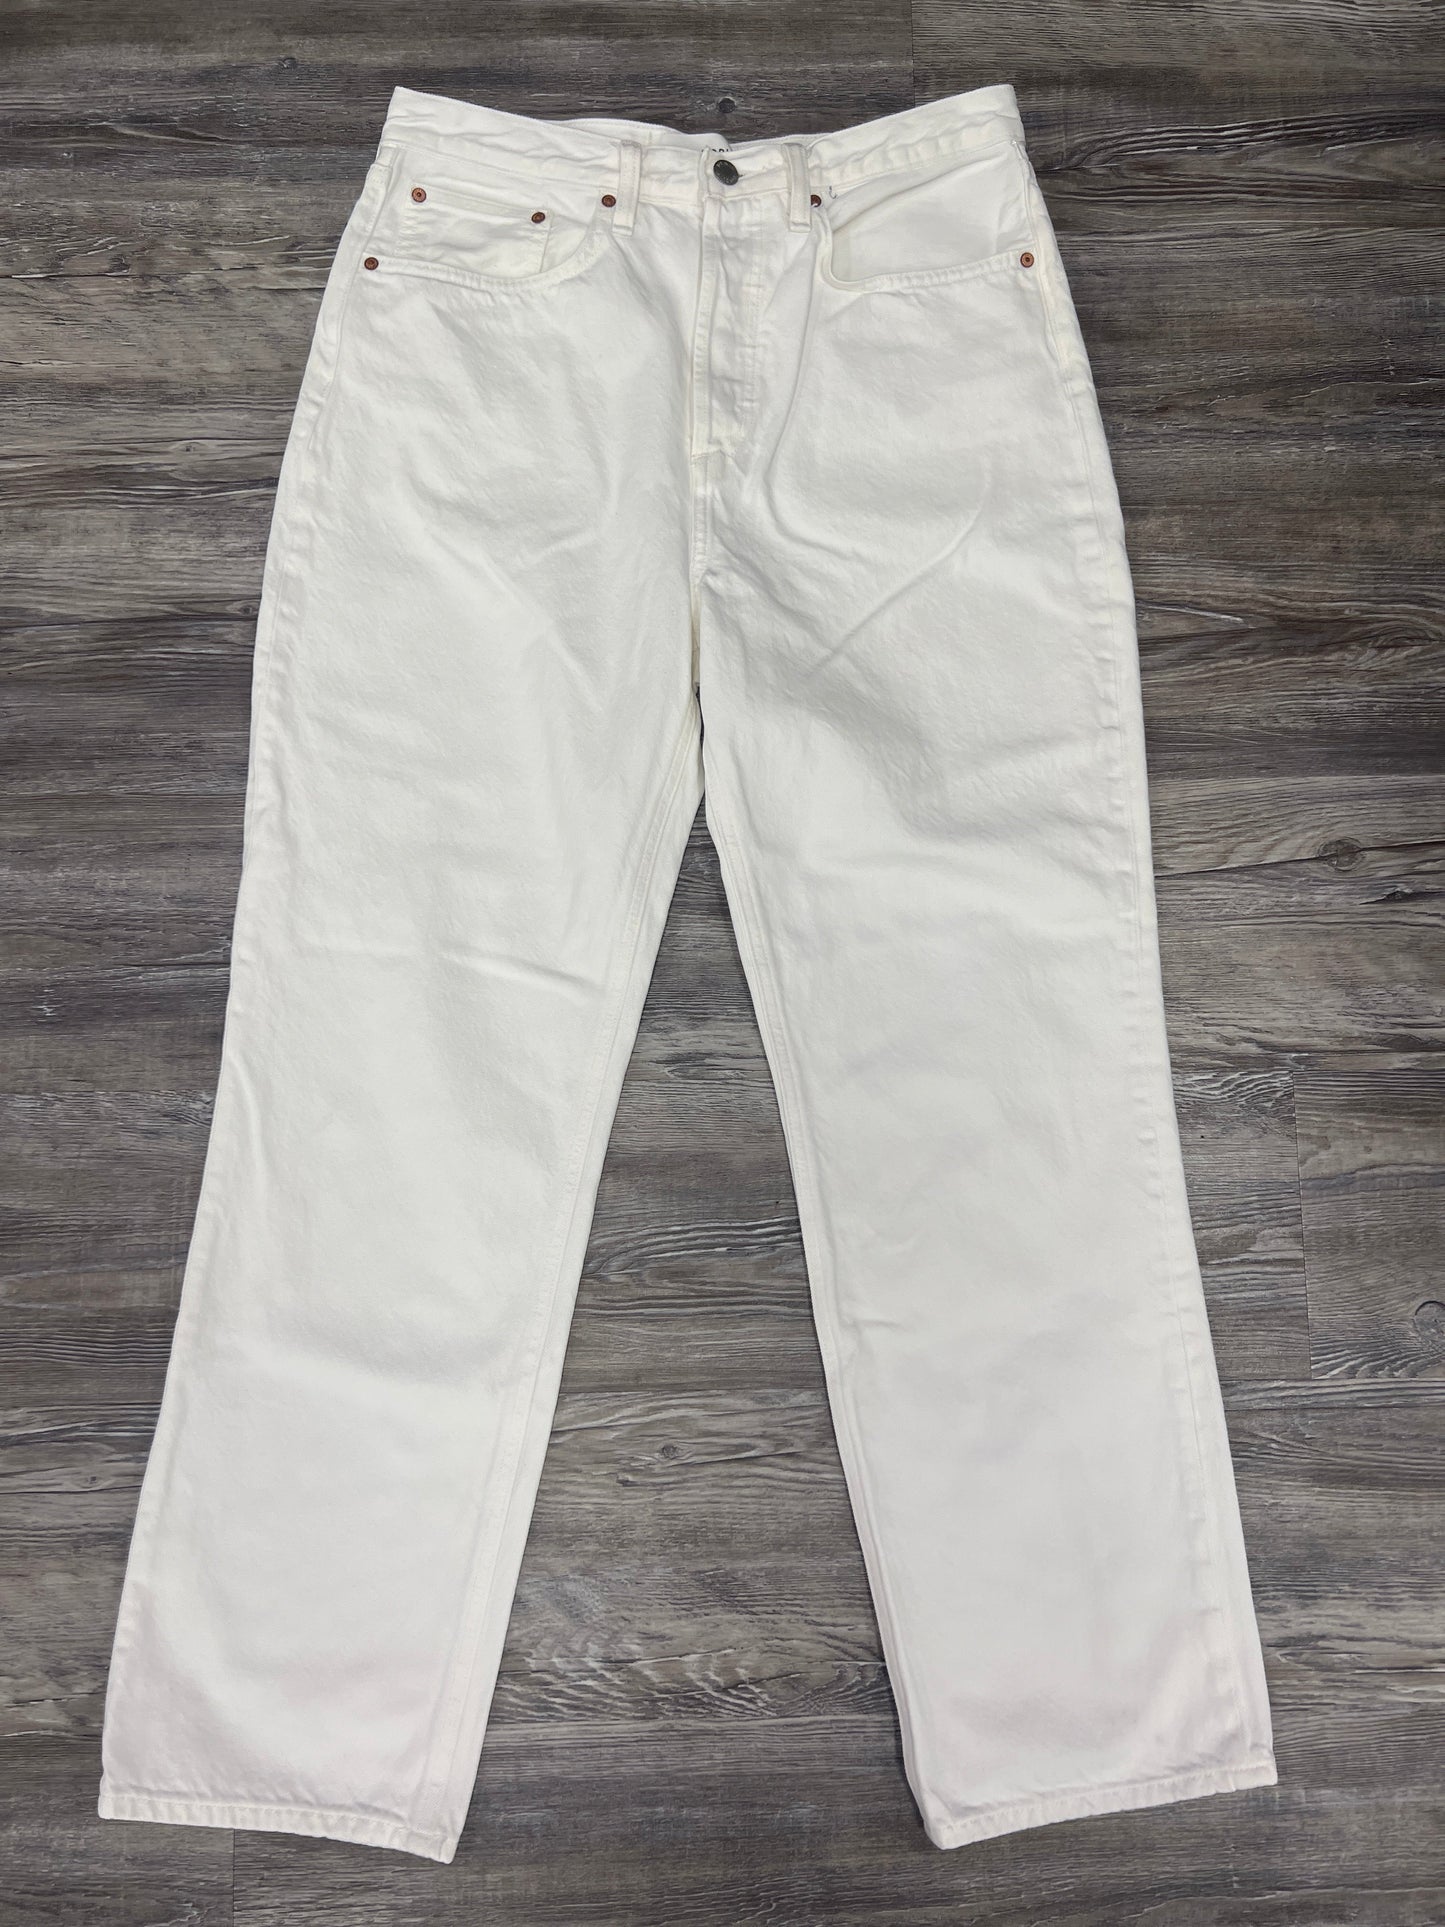 White Jeans Designer Cmb, Size 8l